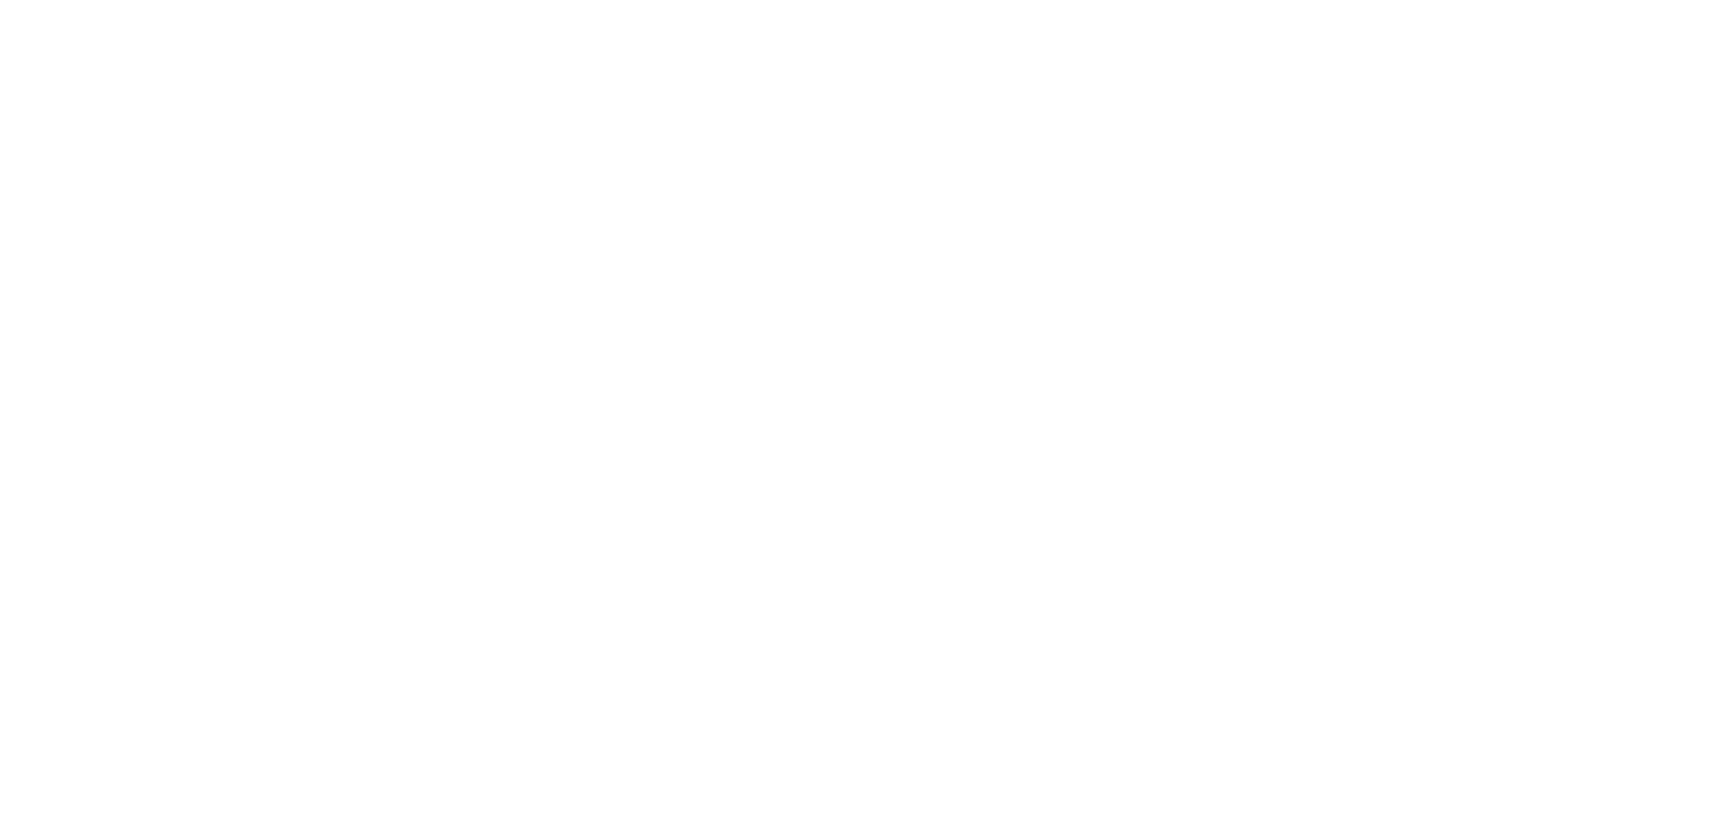 Lost Woods American Single Malt Whiskey logo with crosscut tree